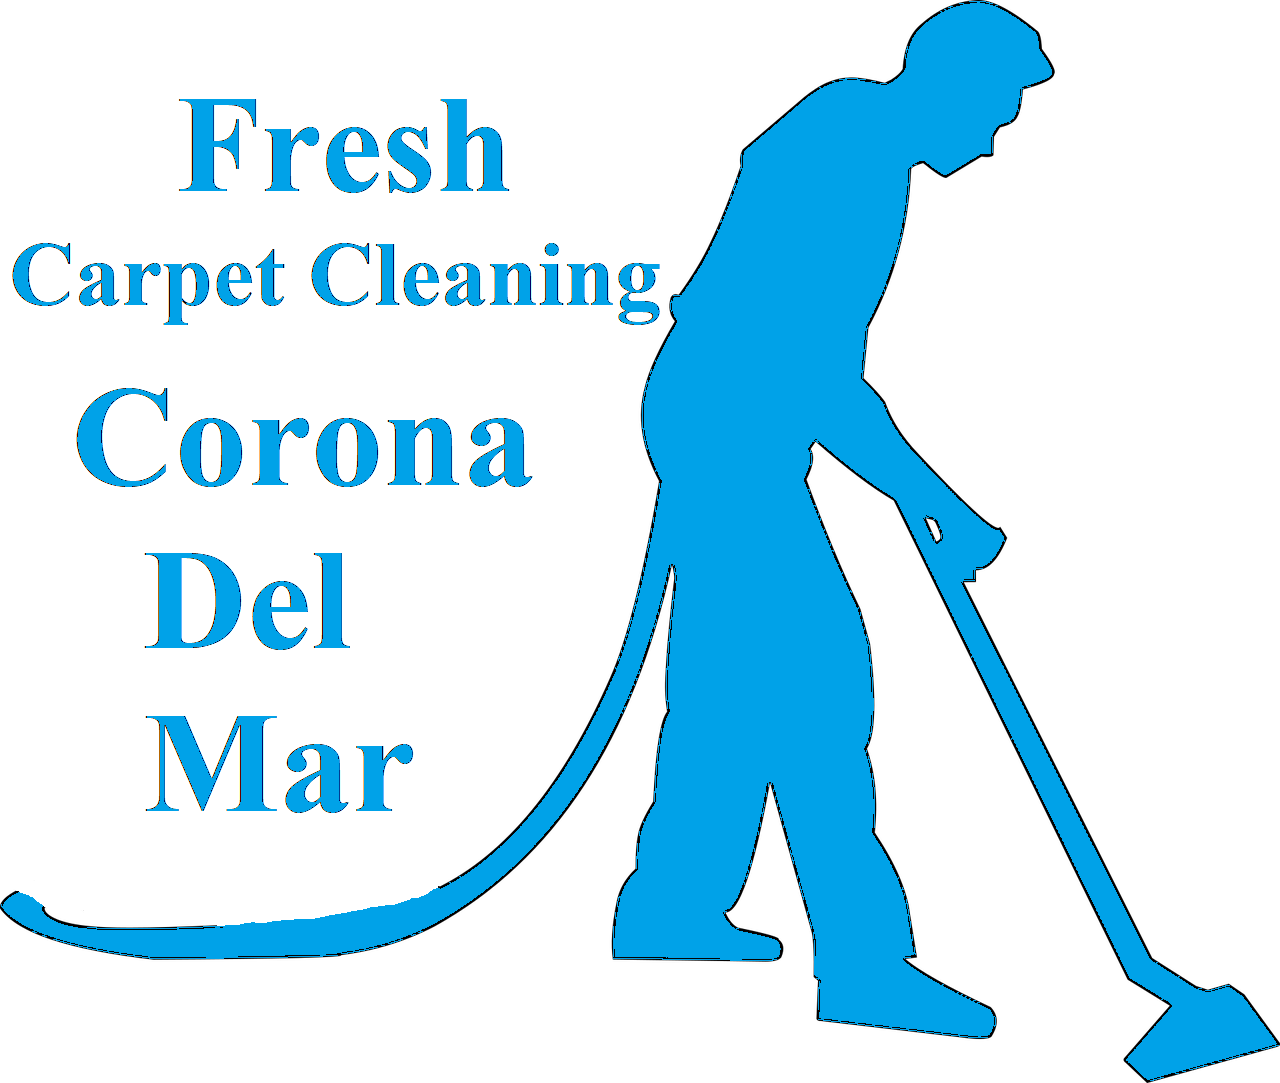 Fresh Carpet Cleaning Corona Del Mar